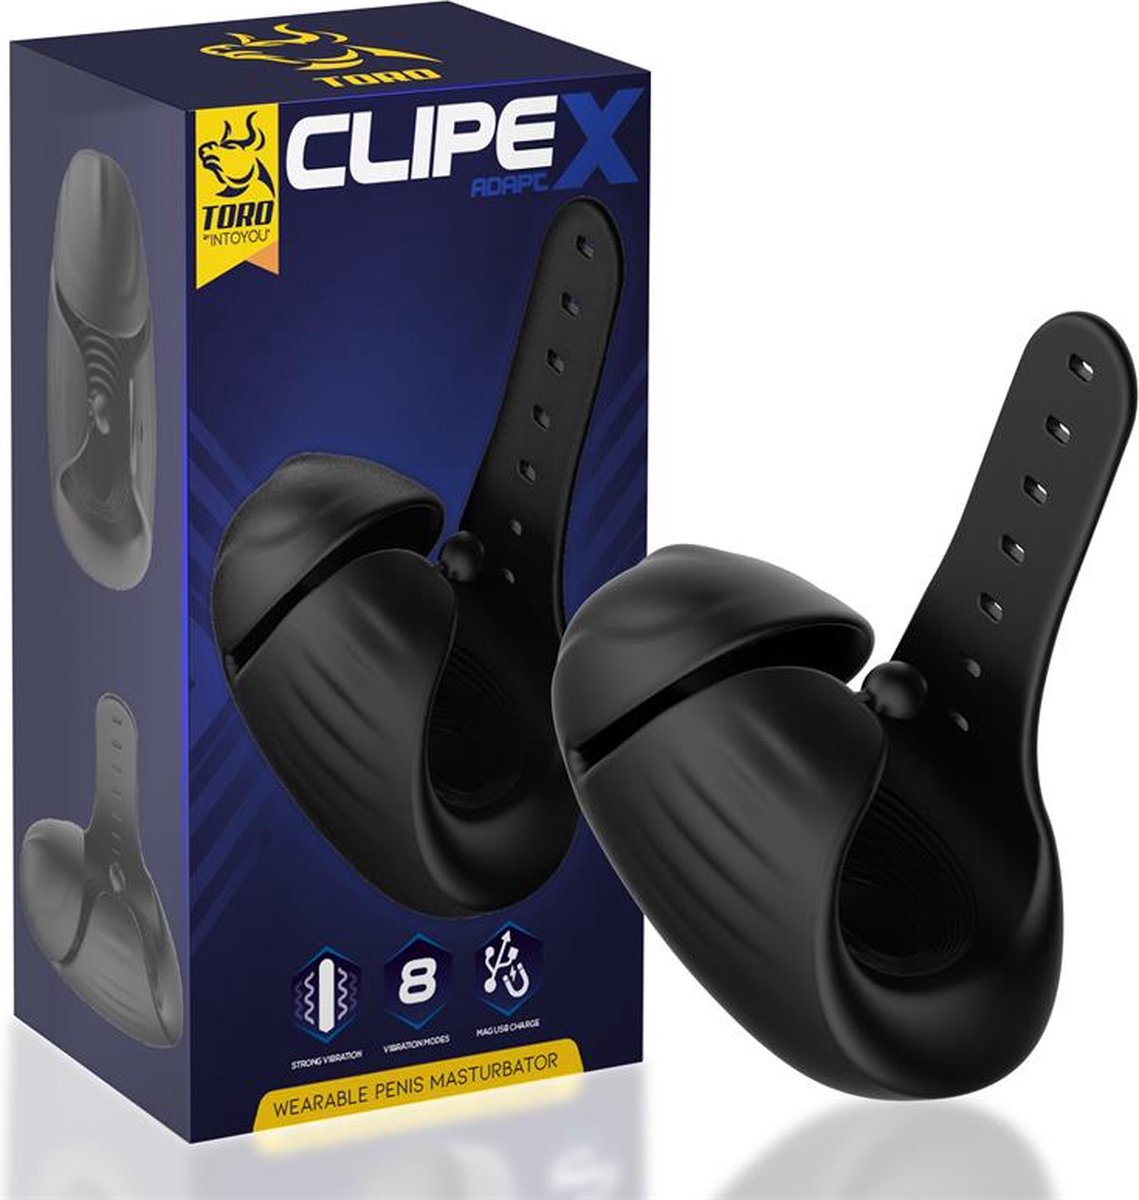 TORO - Clipex Adjustable Male Masturbator With Clip System Premium Silicone Magnetic Usb